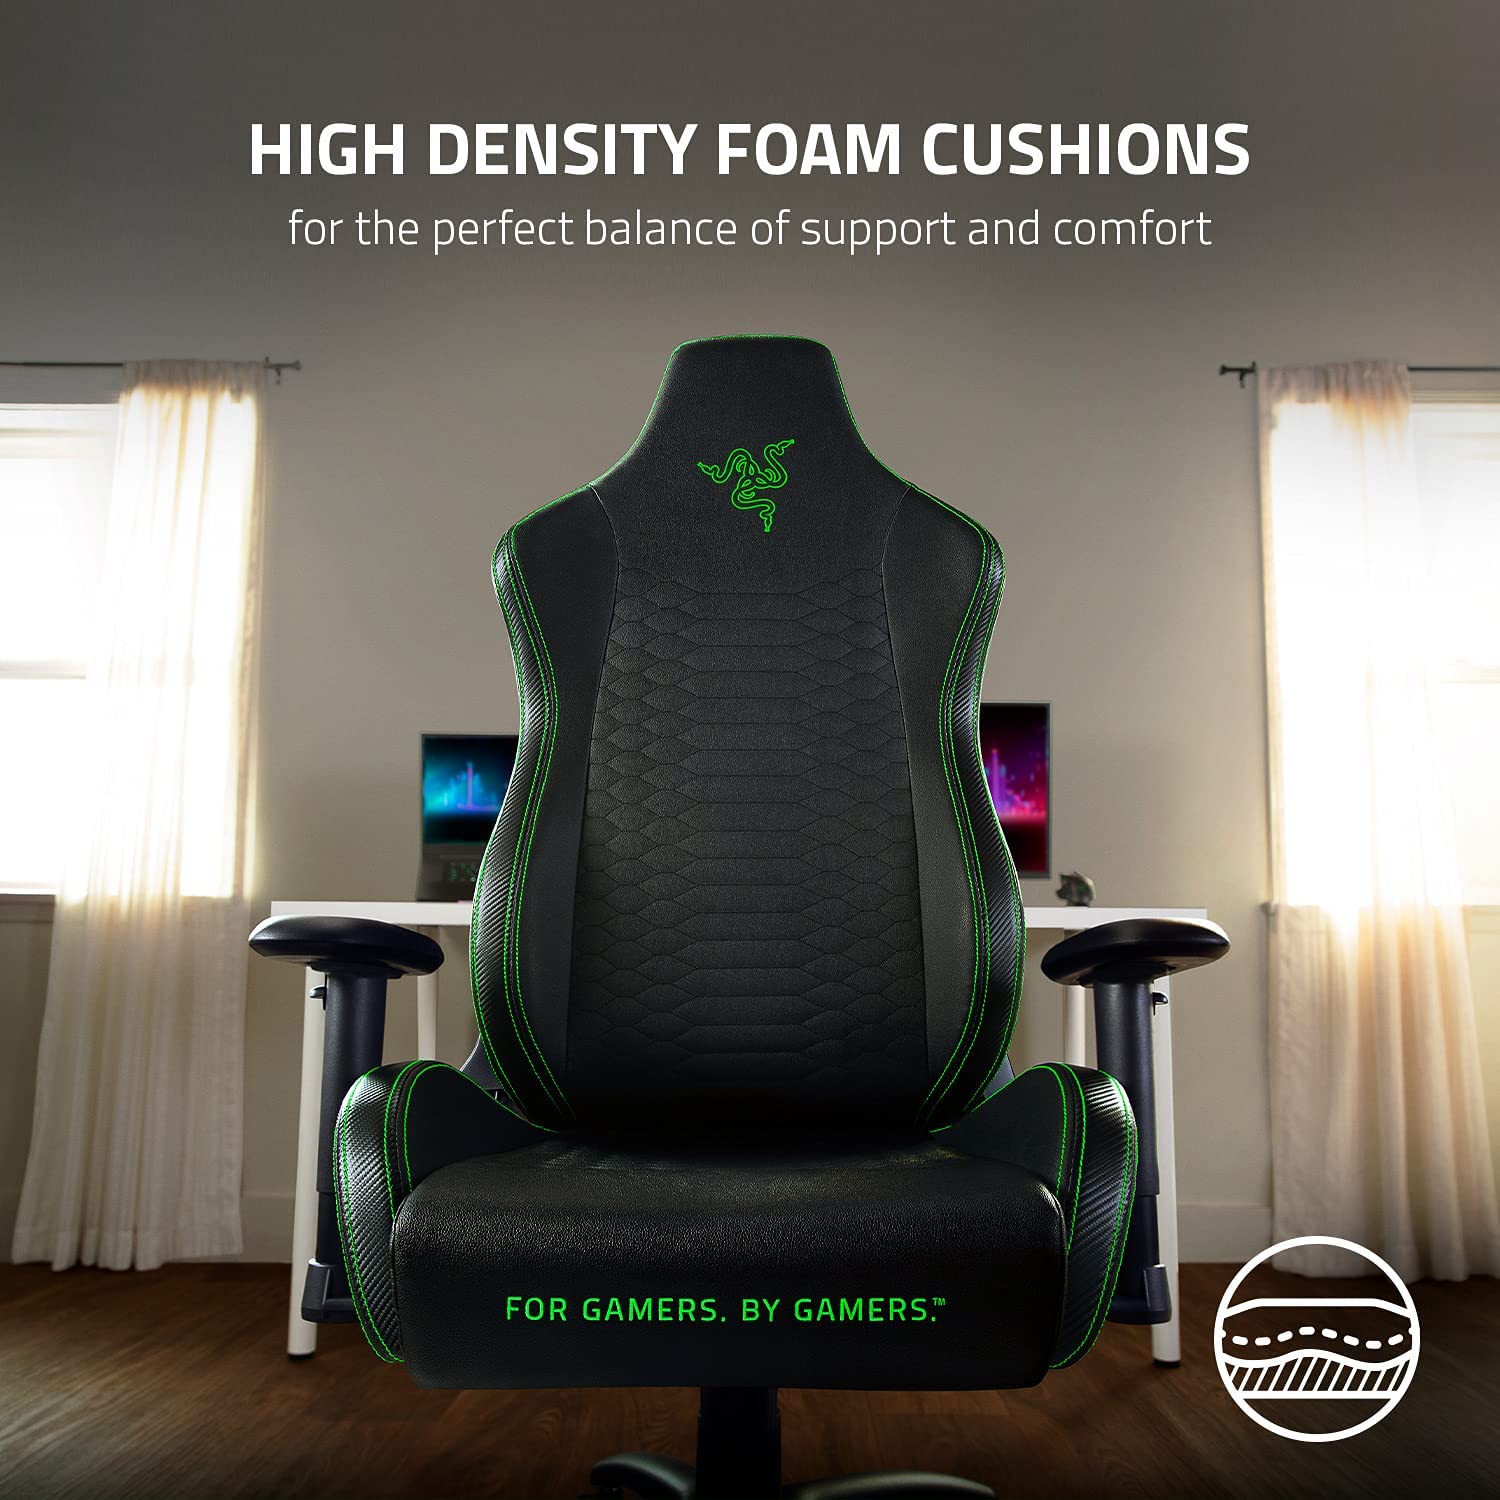 Razer Iskur X Ergonomic For Hardcore Gaming Multi-Layered Leather High-Density Foam - Black/Green